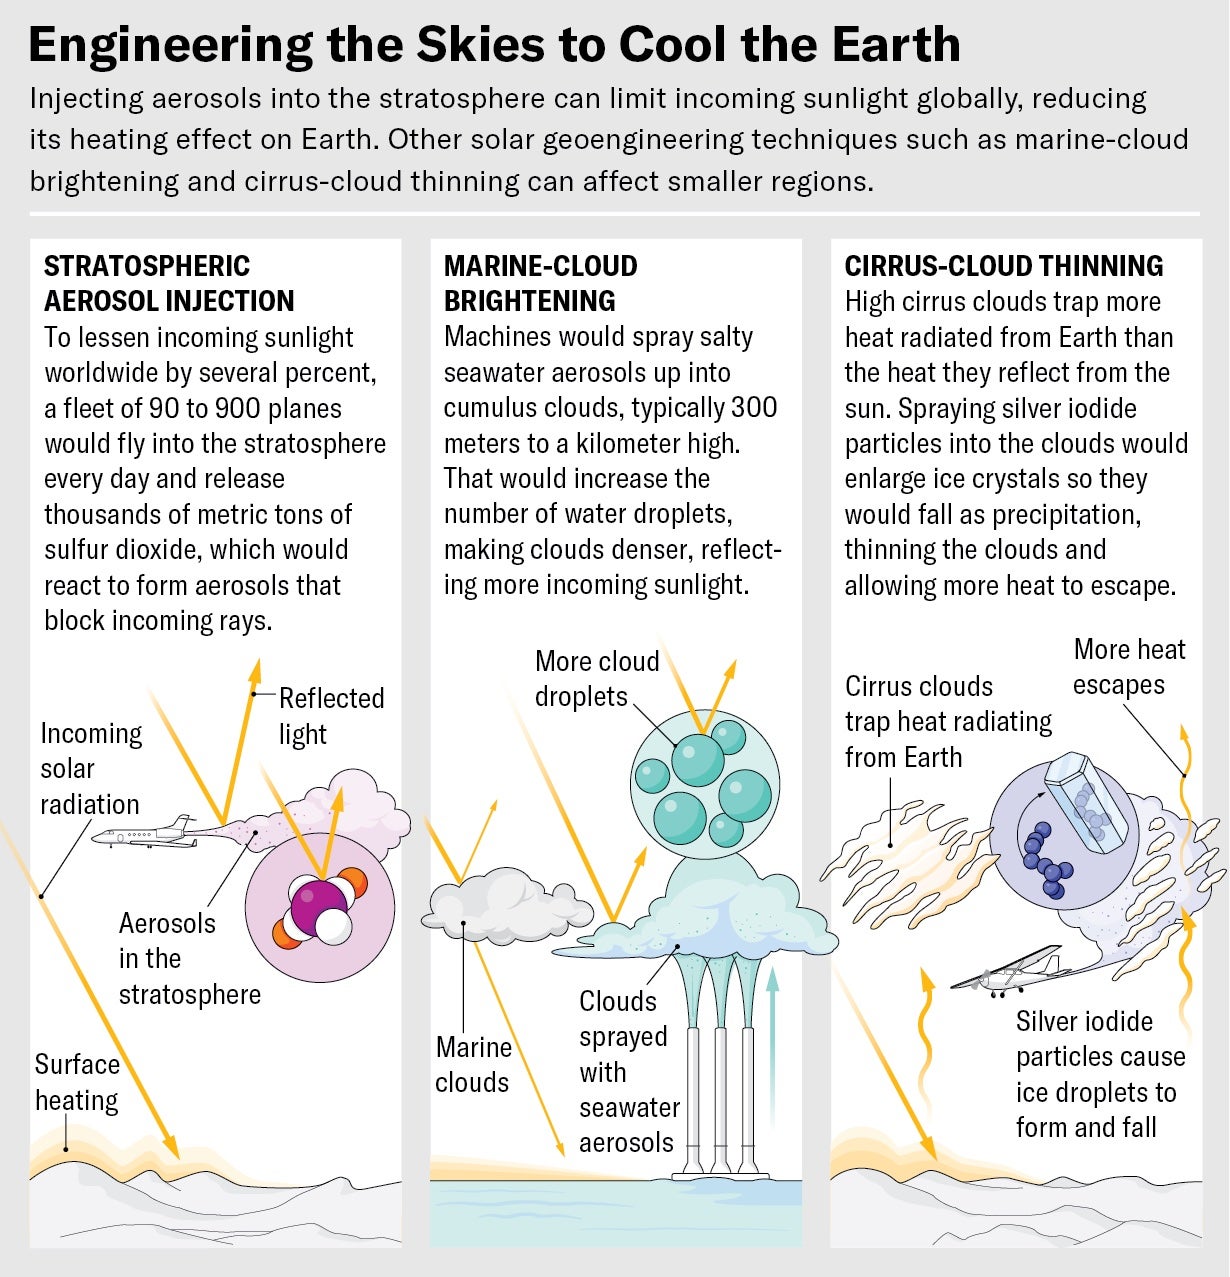 Graphic illustrates the basic premise behind three solar geoengineering techniques; stratospheric aerosol injection, marine-cloud brightening and cirrus-cloud thinning.